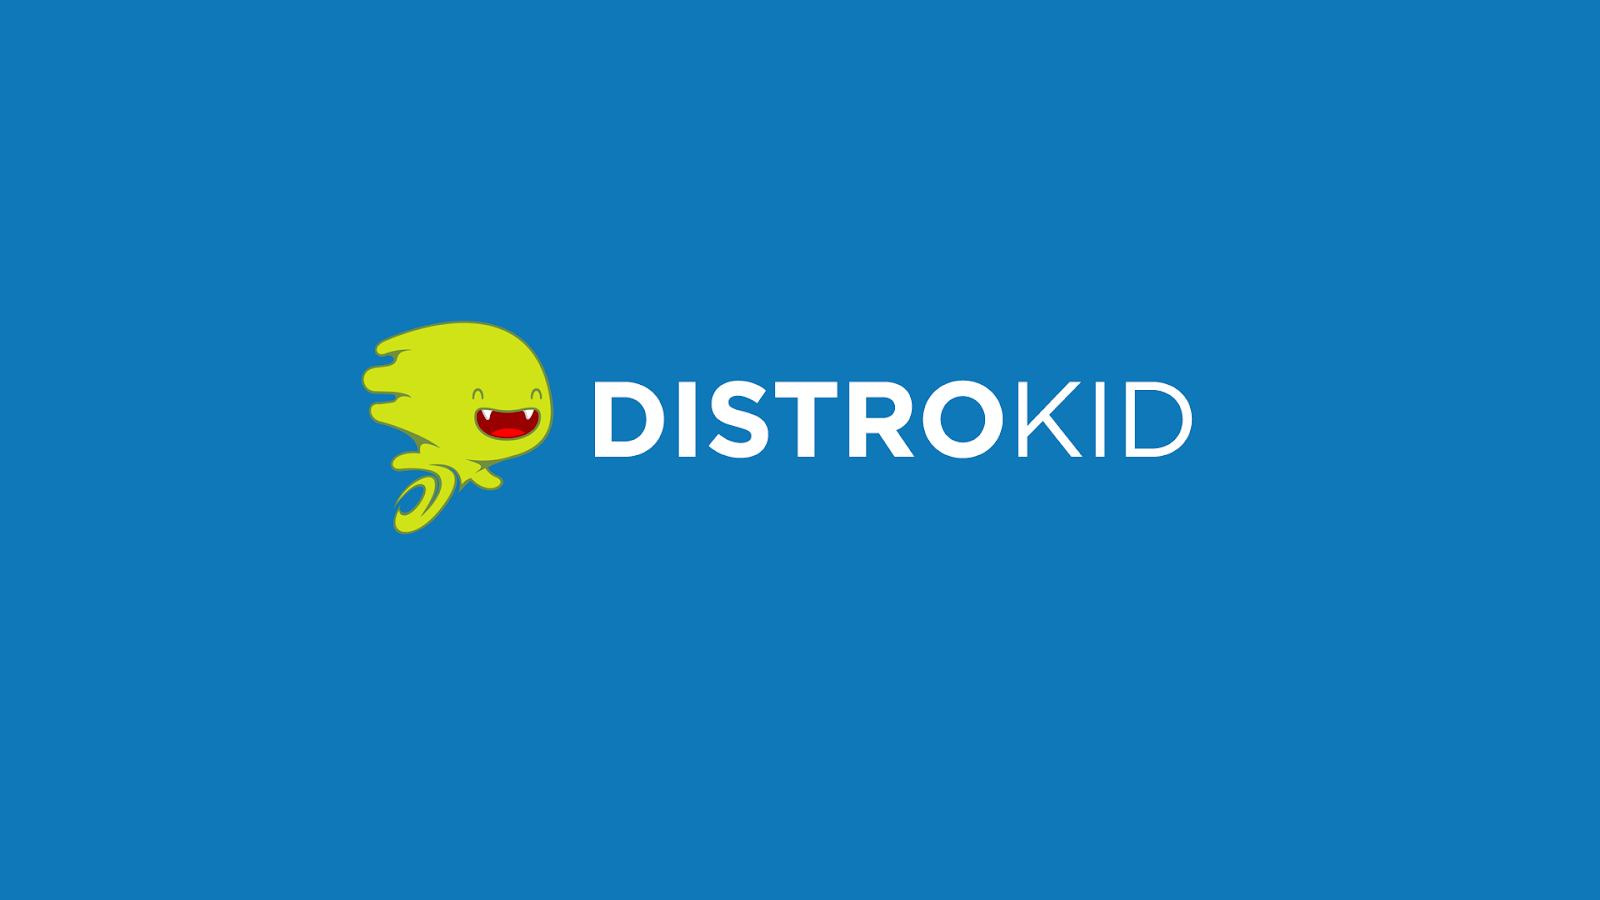 Music Distributor DistroKid Raises Money At $1.3 Billion Valuation